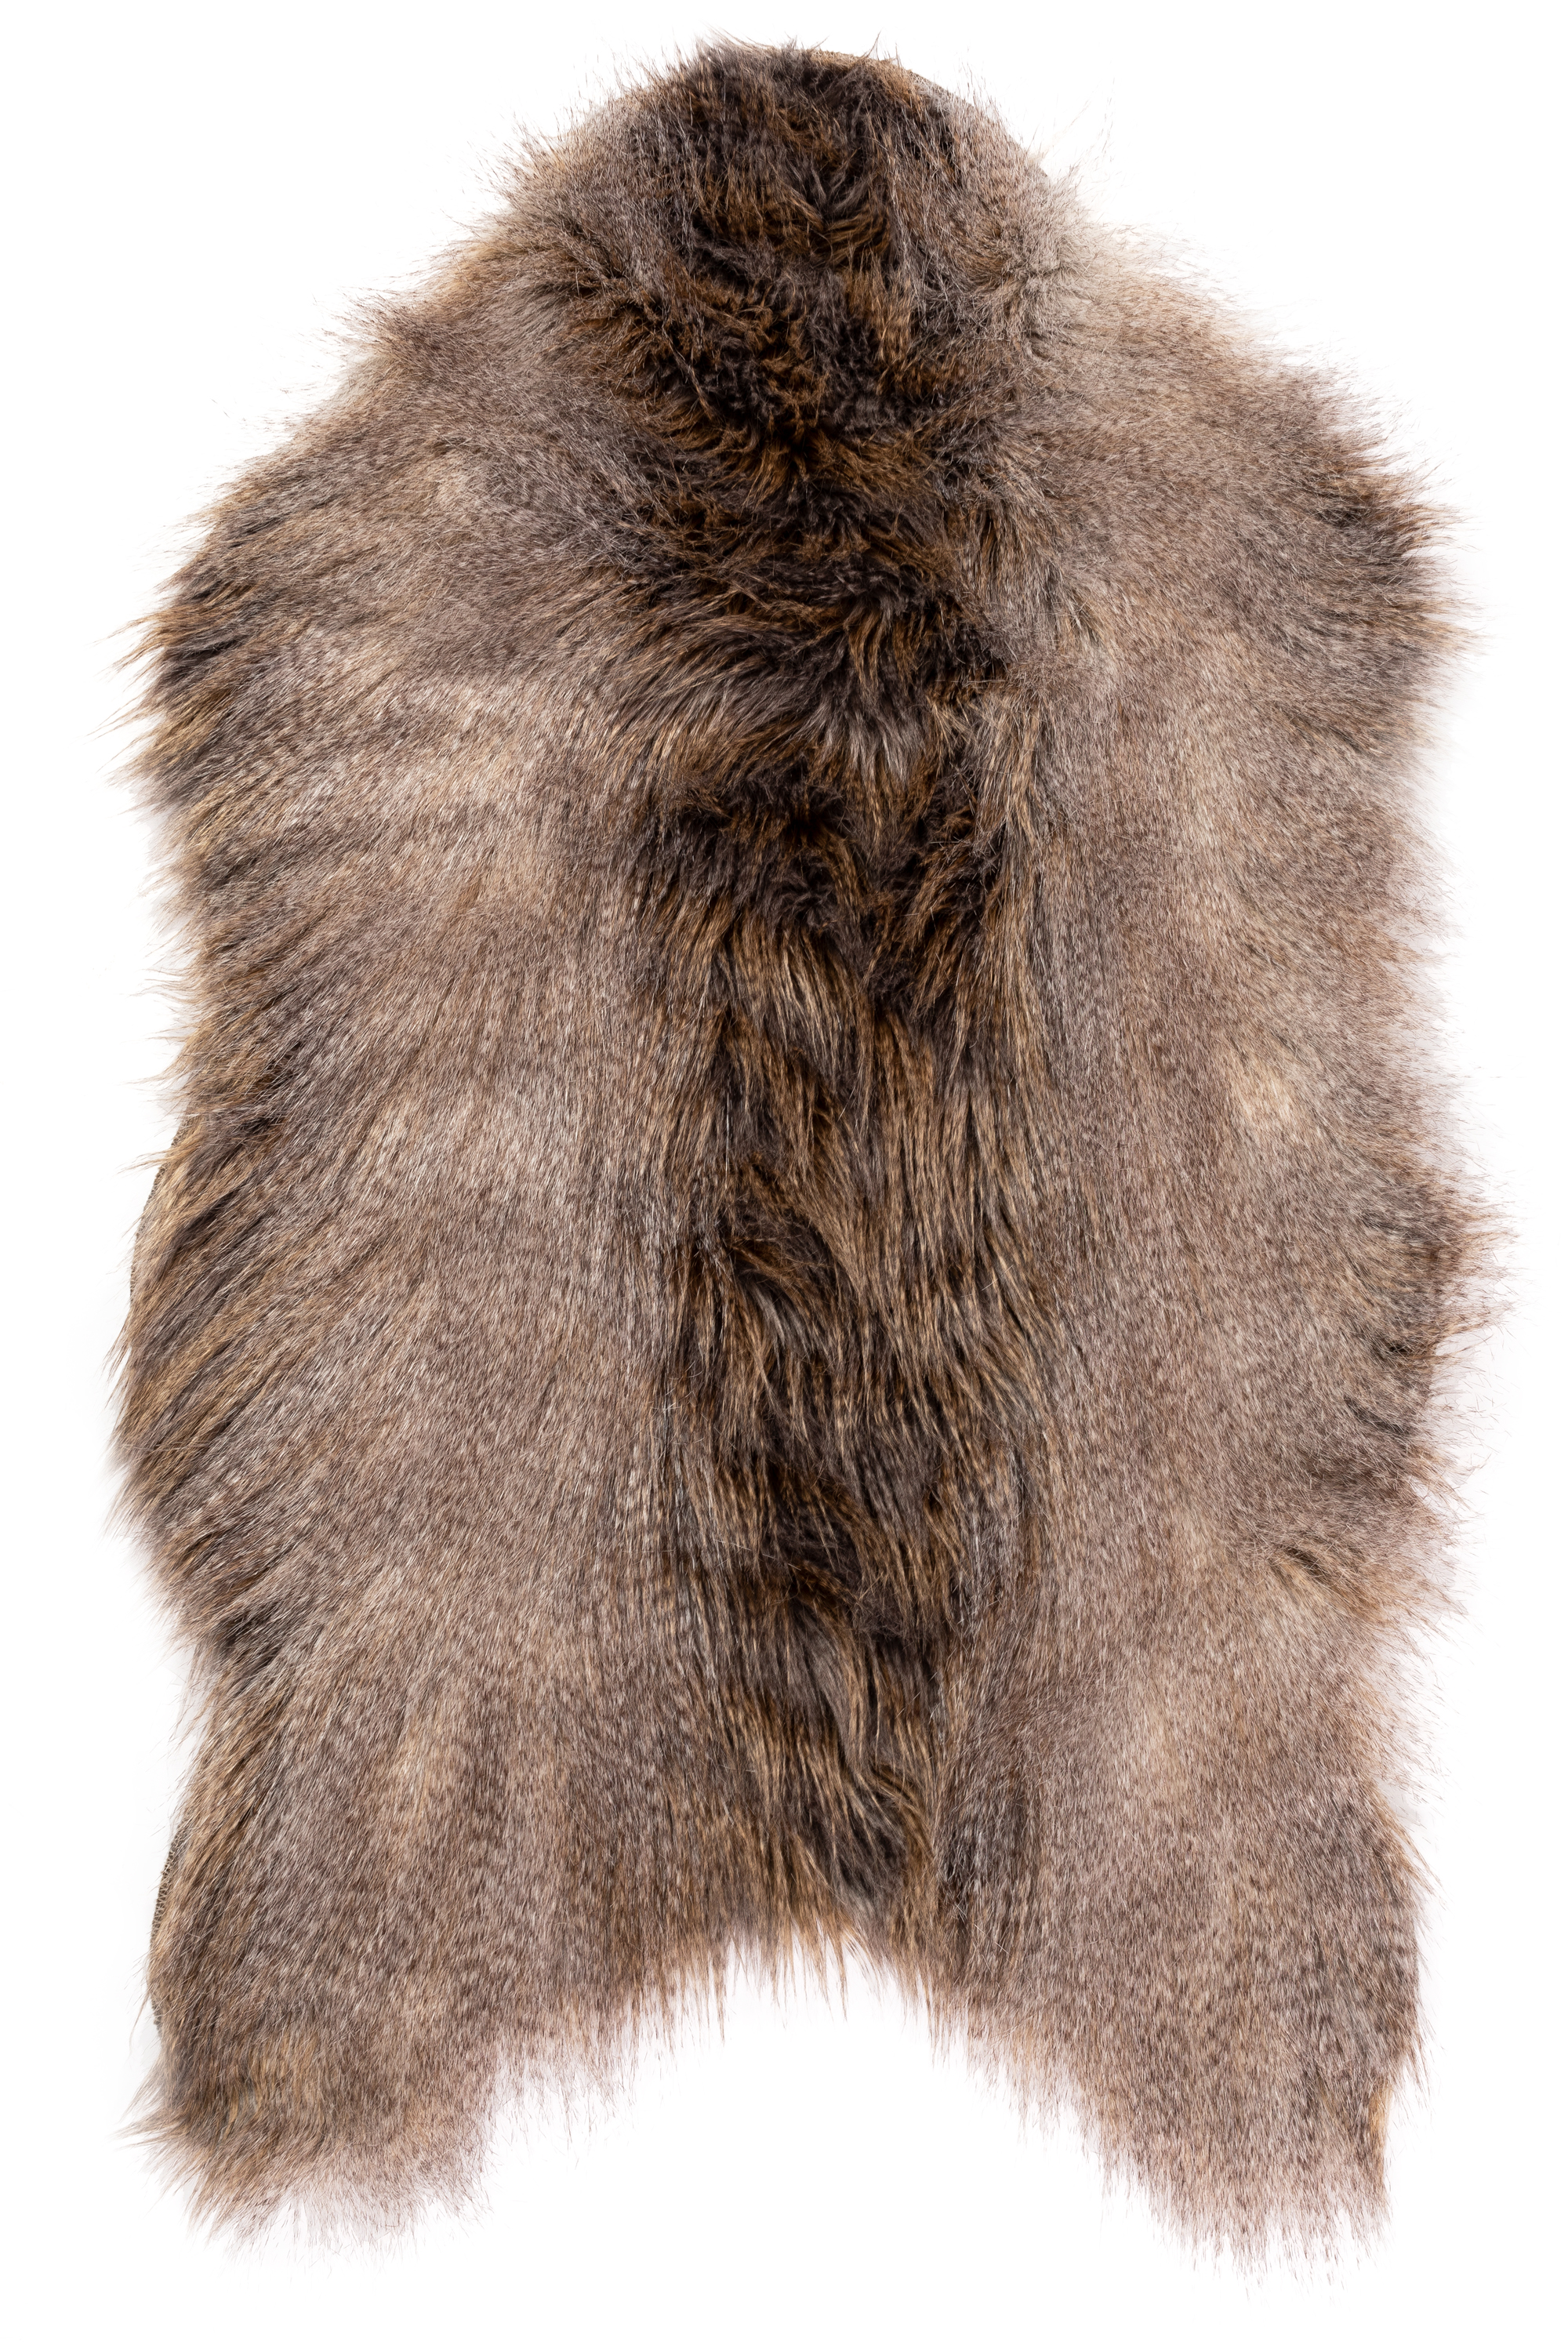 Carpet FOX fur - 50X80cm, dark brown